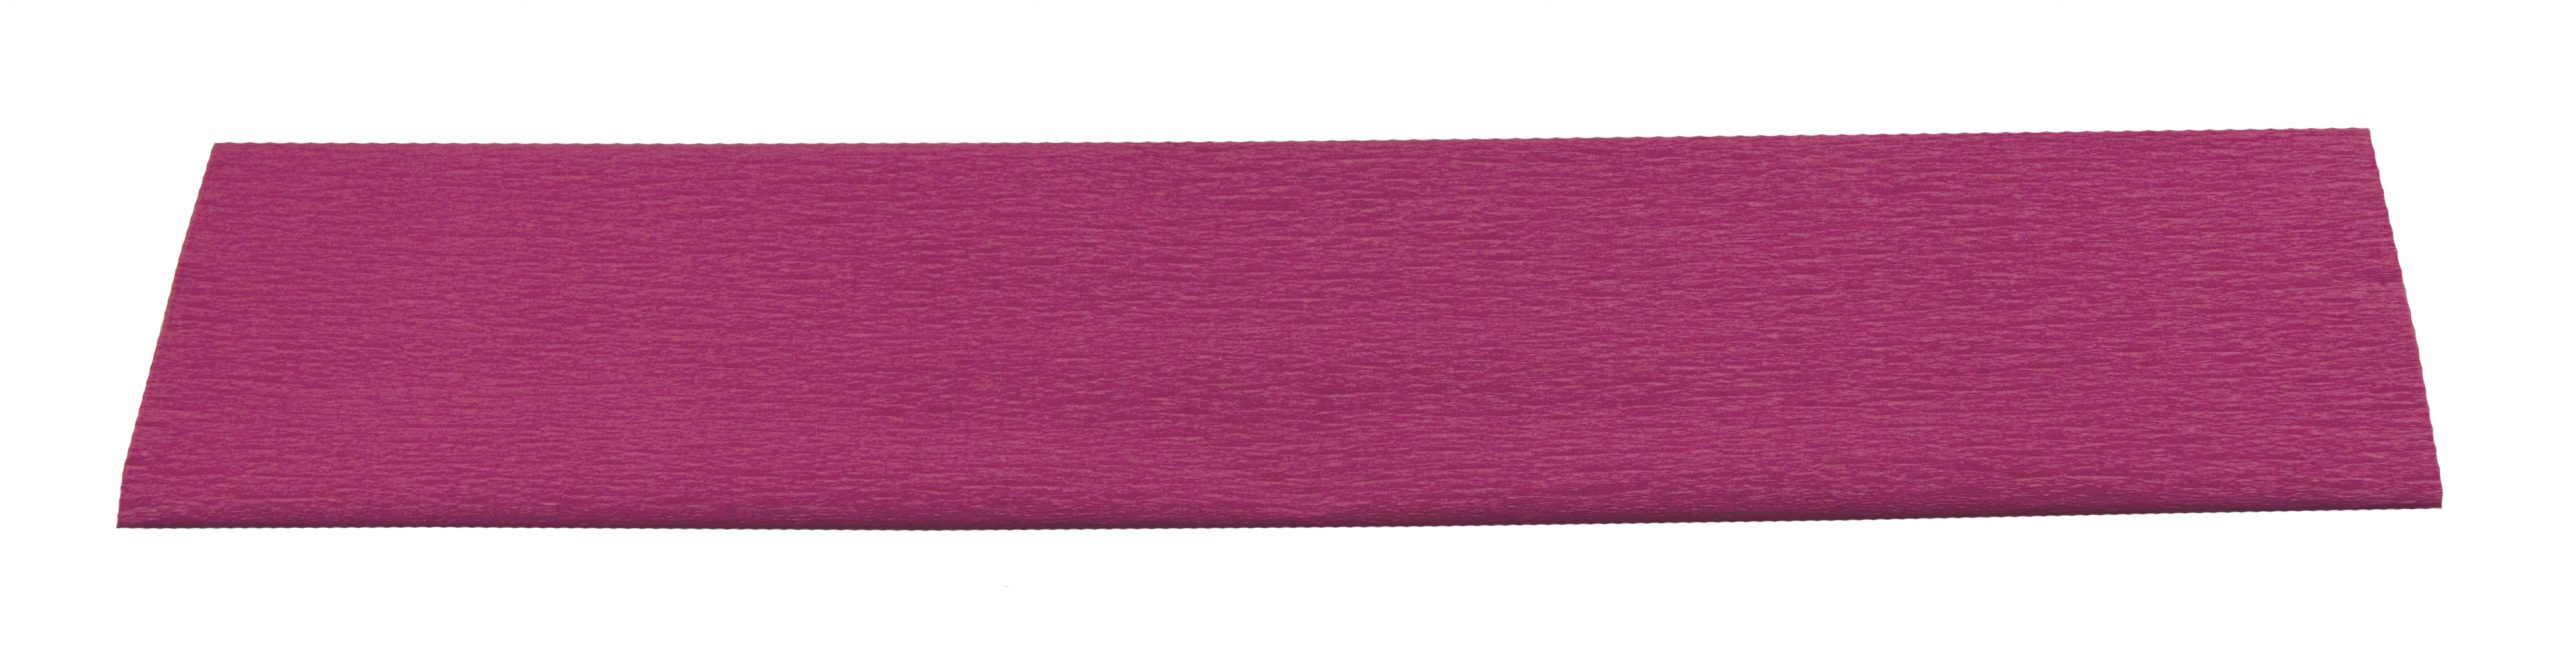 Hârtie creponată Hobby 50 x 200 cm, roșu purpuriu, Herlitz